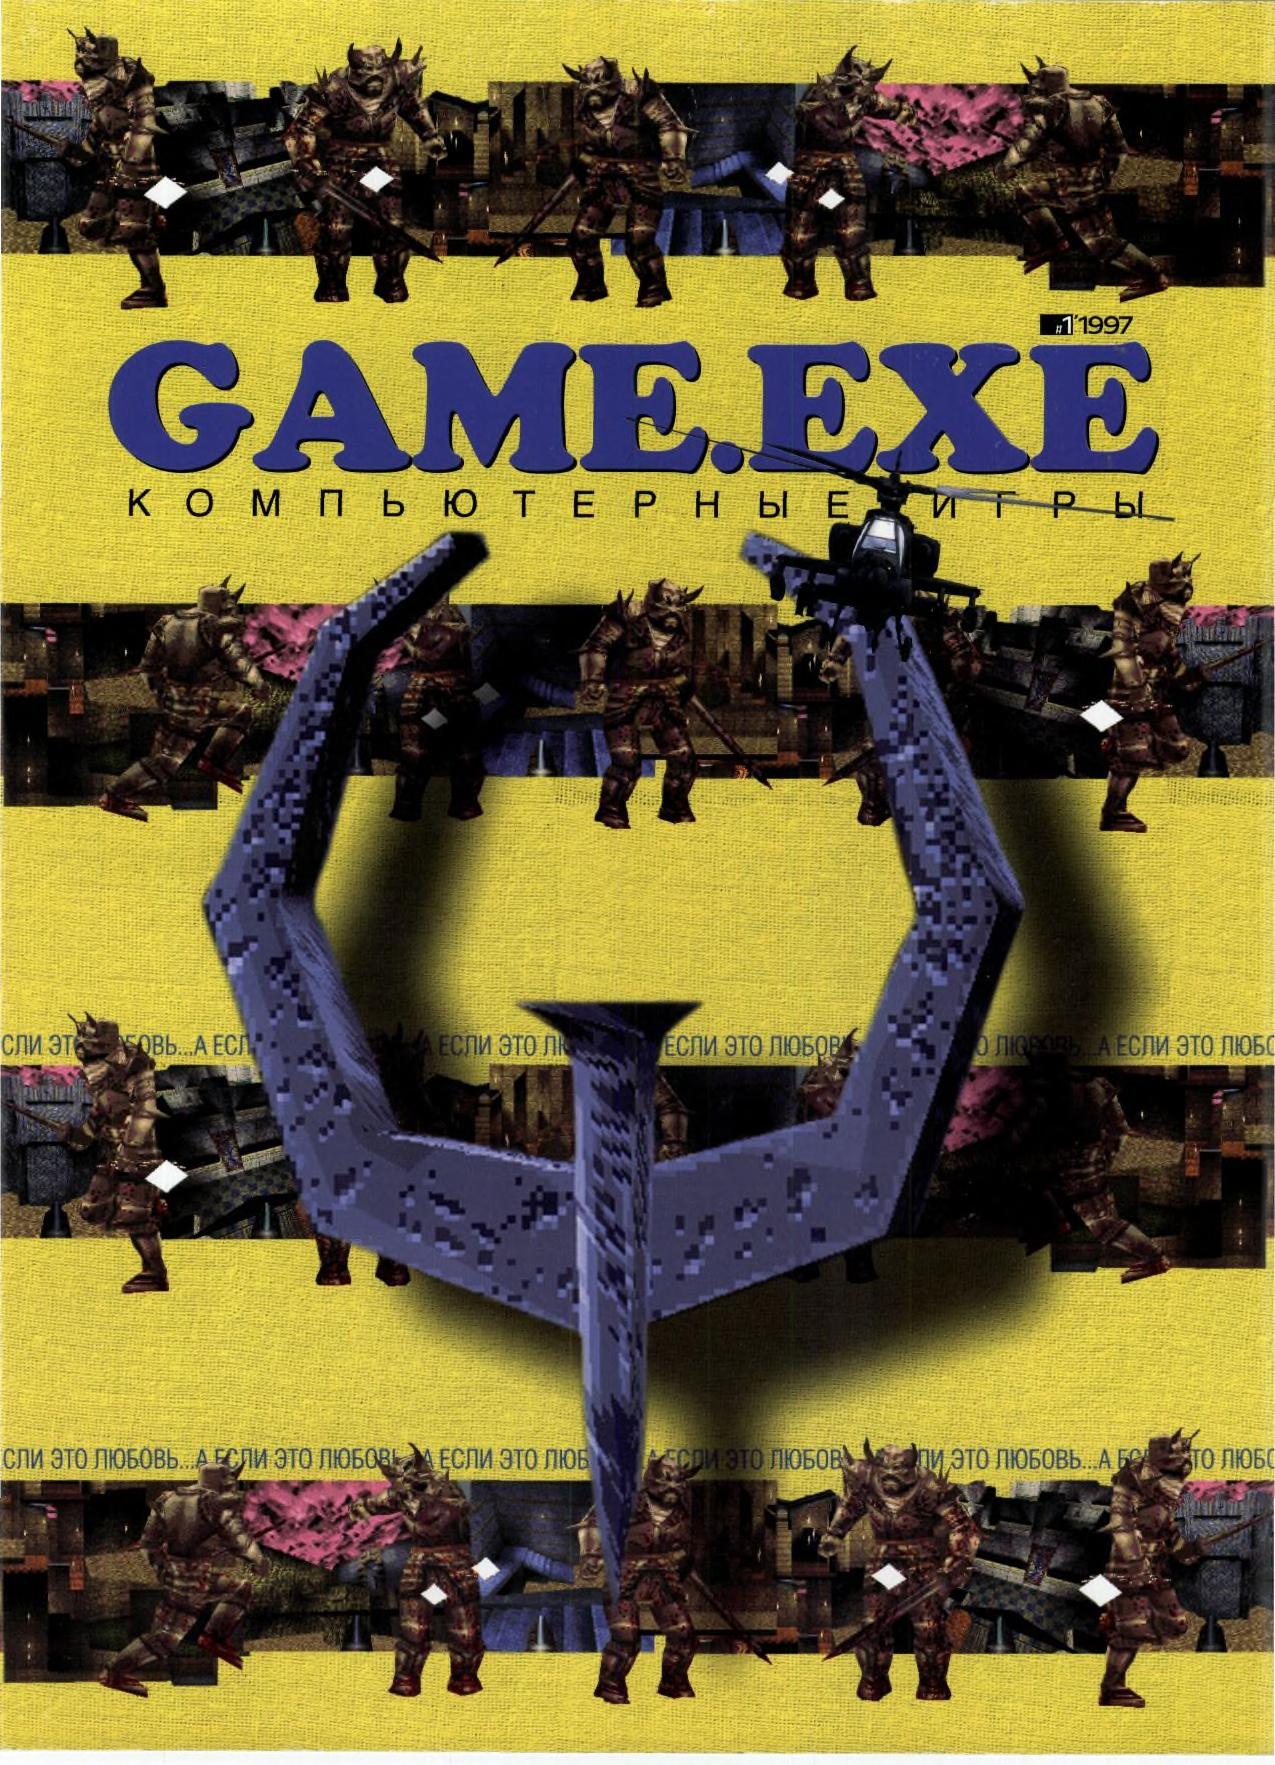 Download game exe. Game exe журнал. Game.exe 1997. Game exe 2003. Game exe журнал 2004.